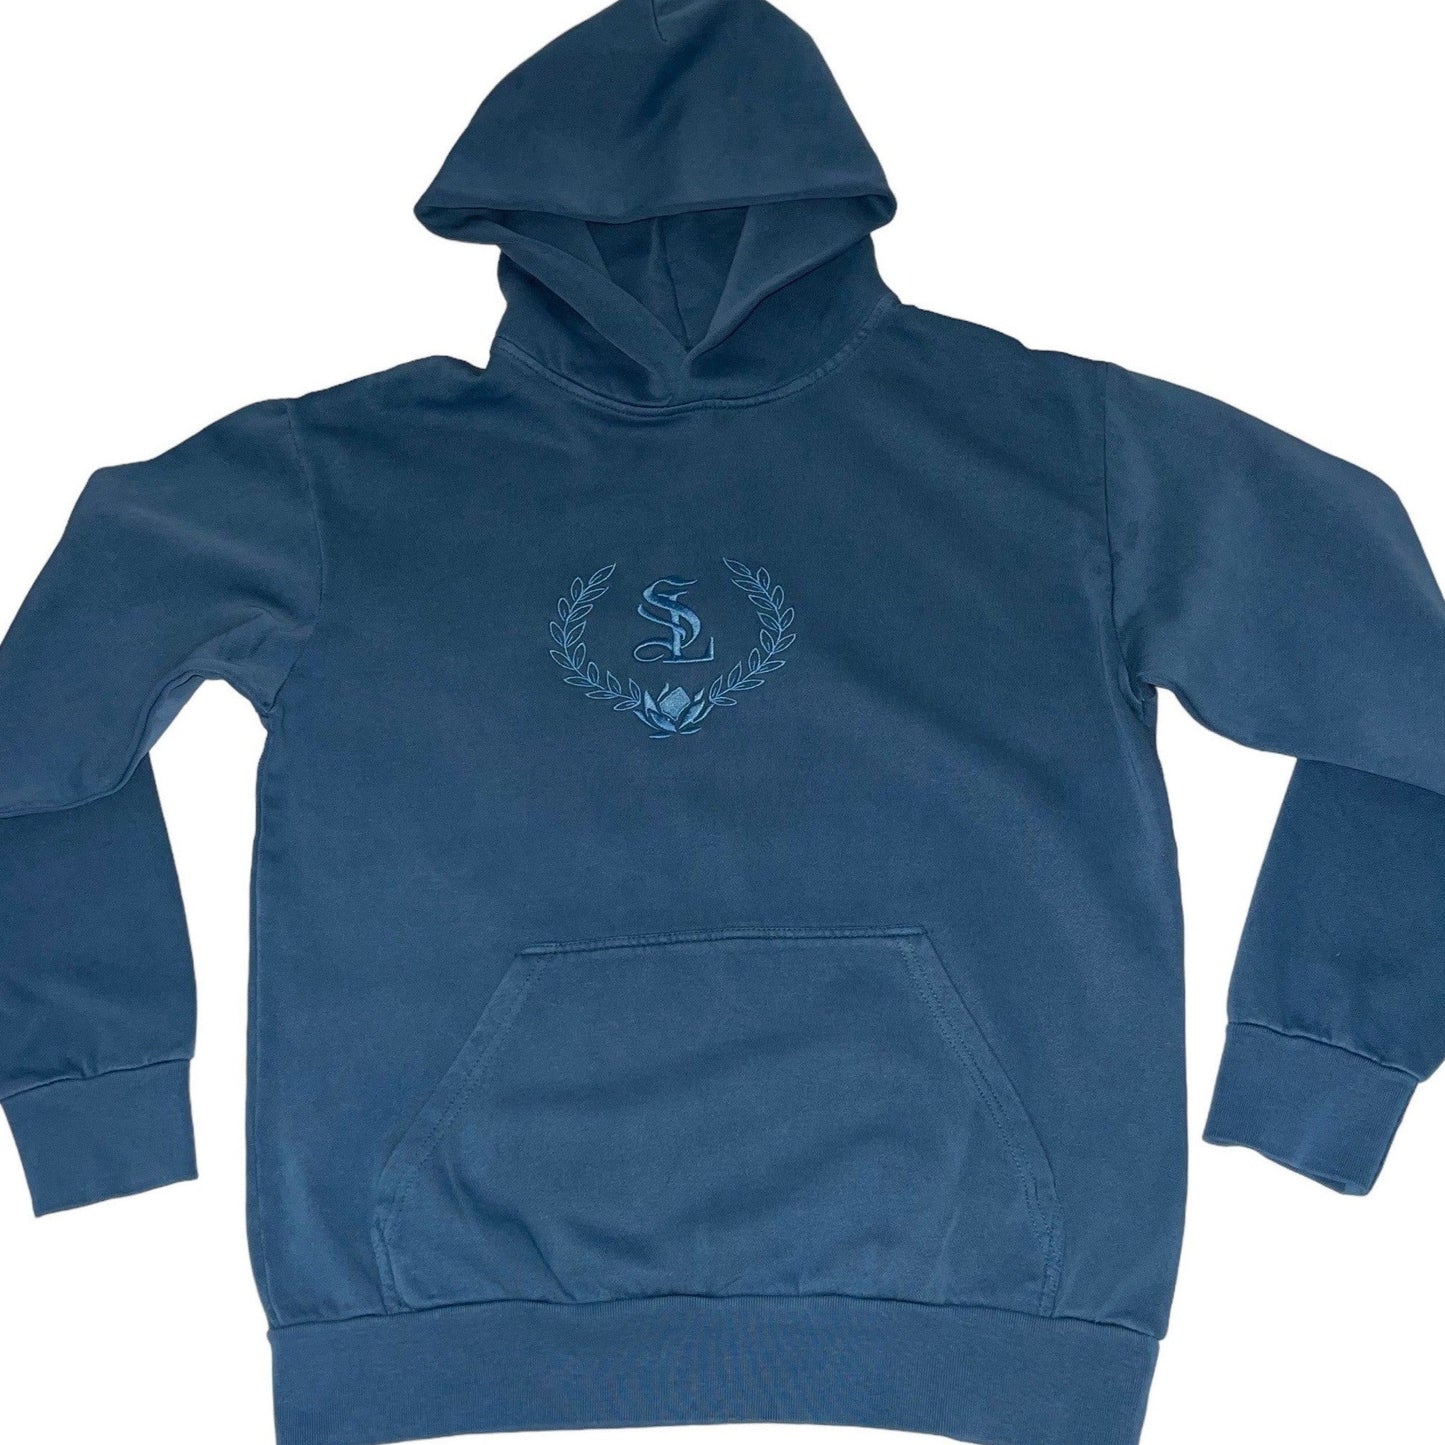 Lotus Crest - Embroidered Sweatsuit Top - Cobalt - Urban Pullover Hoodie